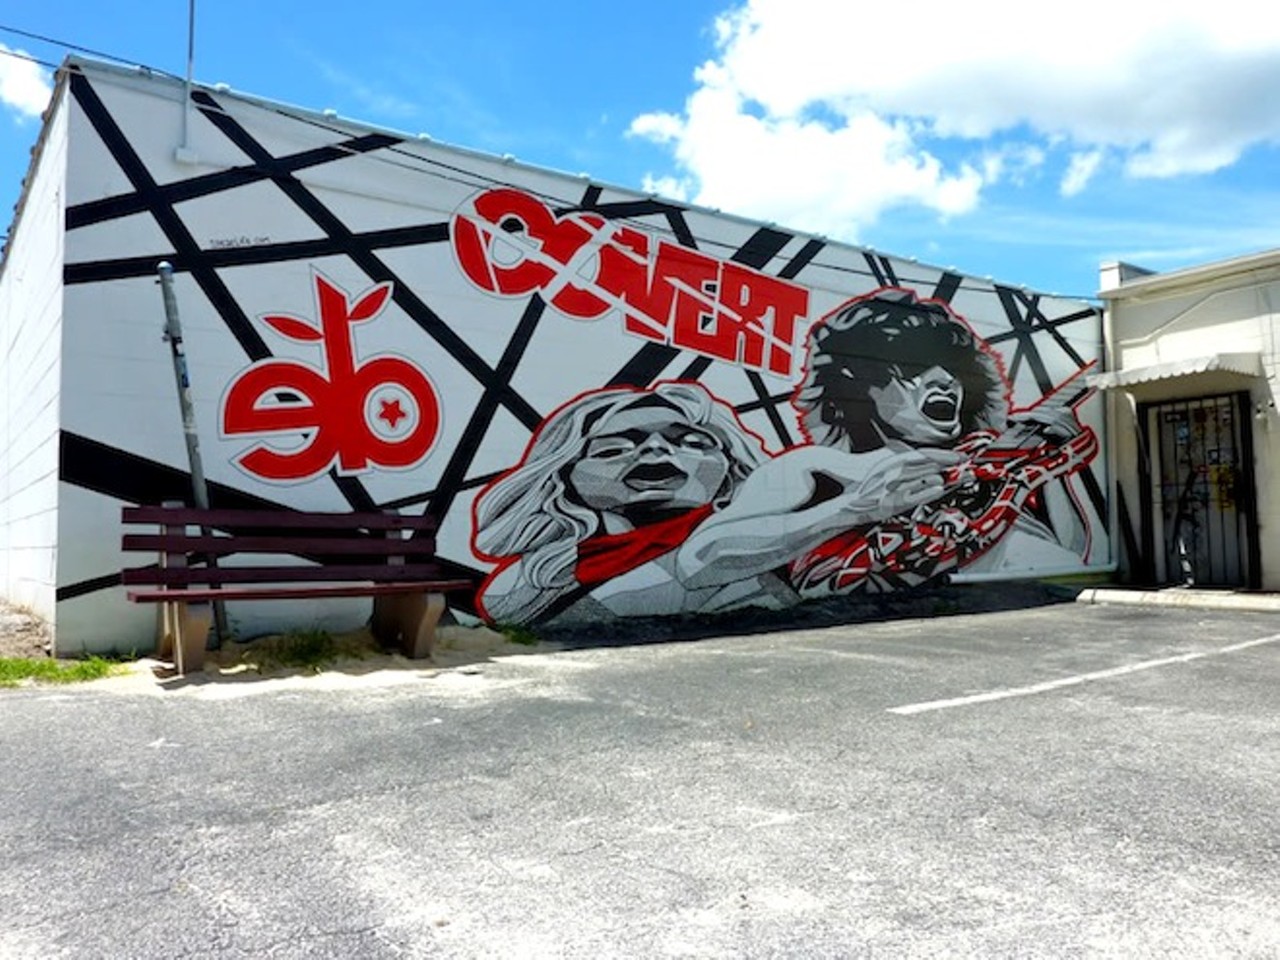 Van Halen Mural, Orlando, Fla.
Courtesy of Andrew Spear